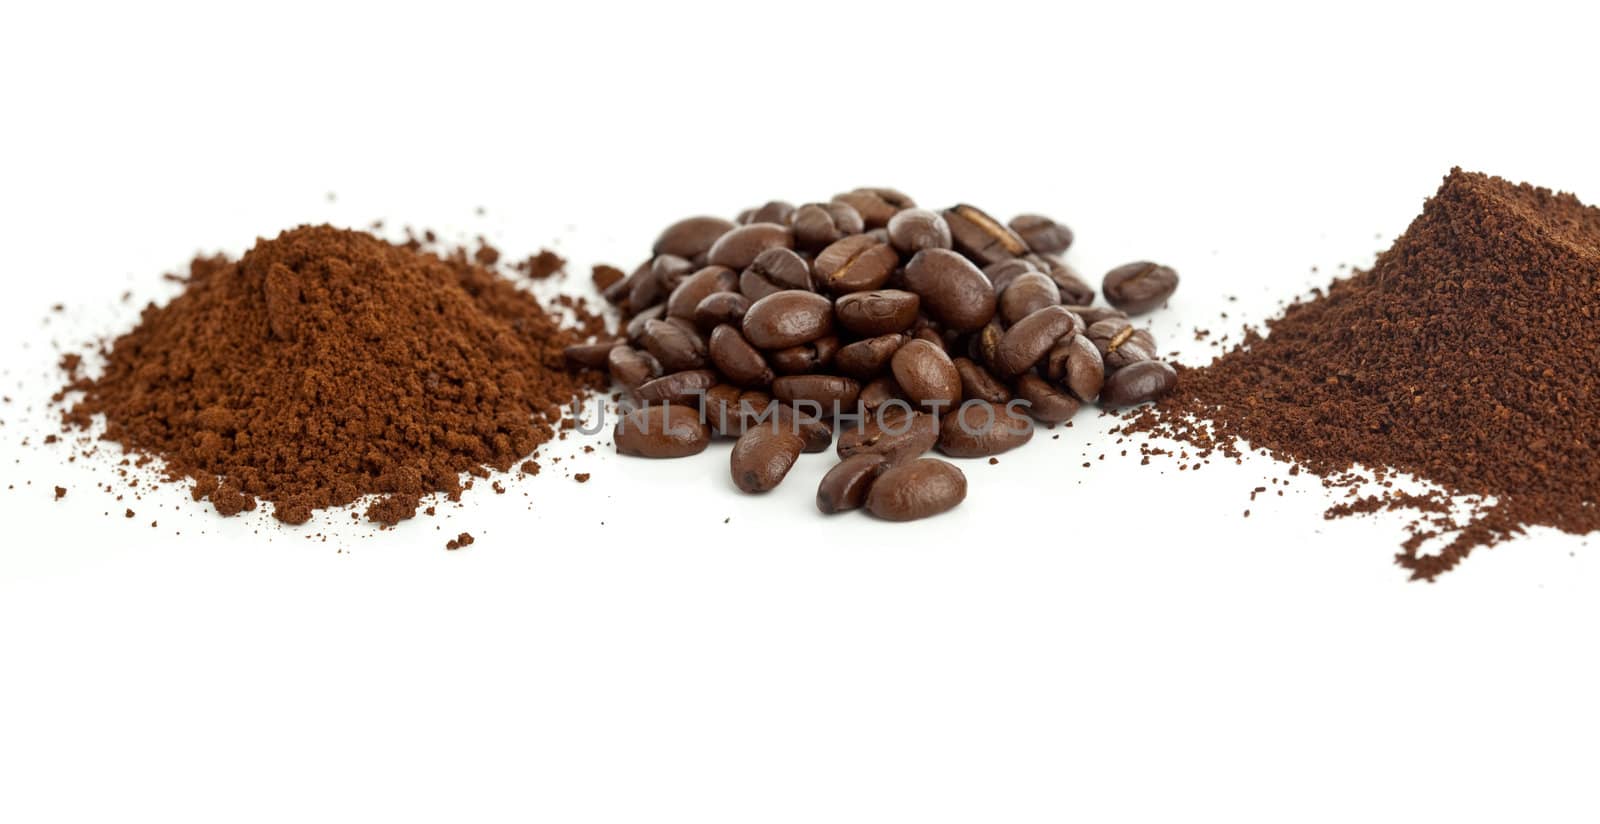 Coffee types by Fotosmurf